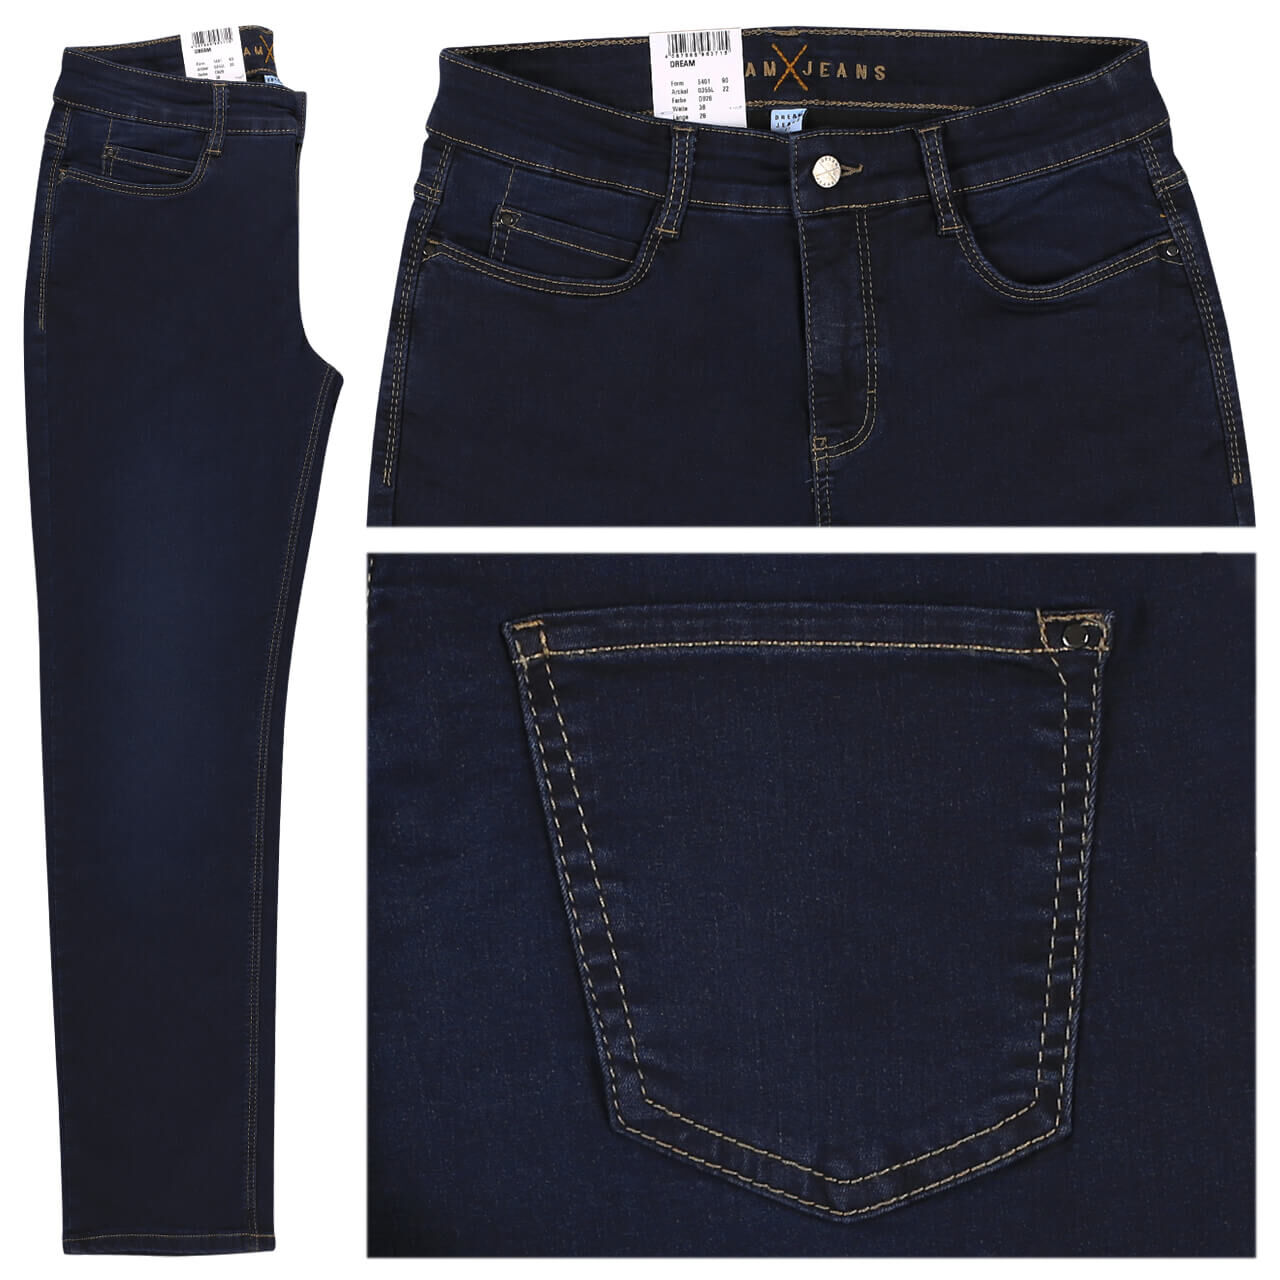 MAC Jeans Dream für Damen in Dunkelblau, FarbNr.: D826